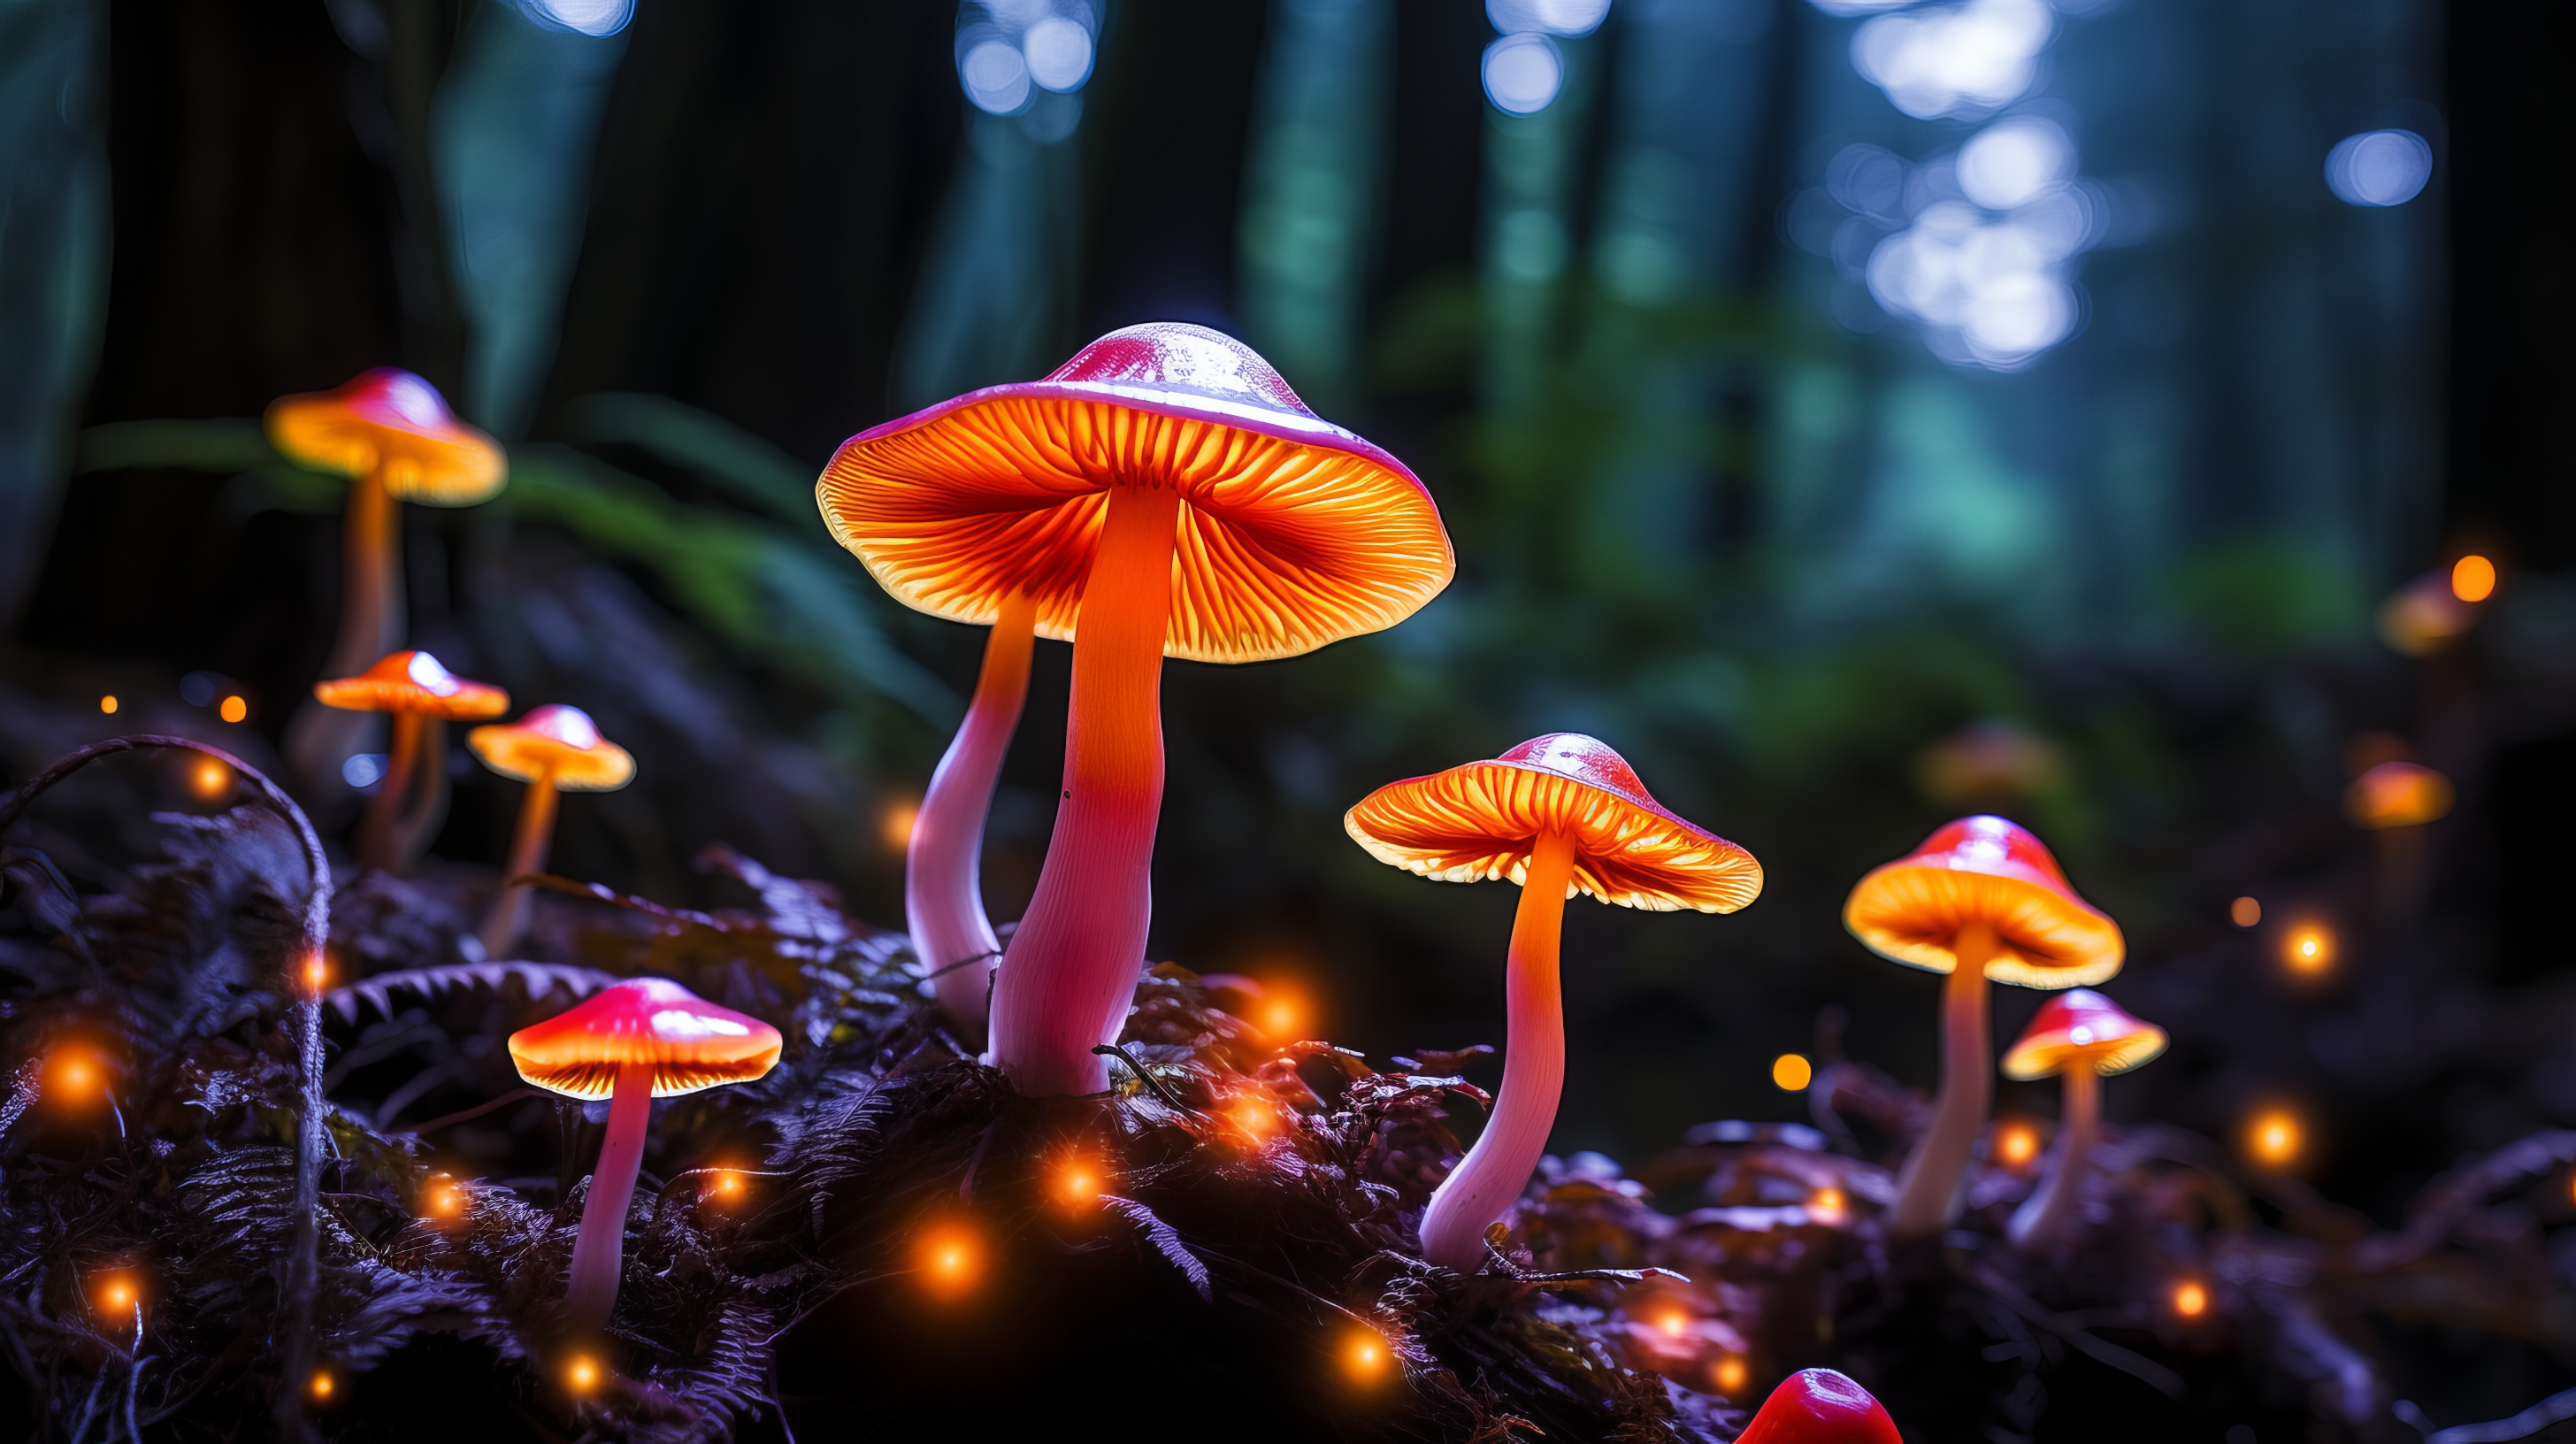 General 2912x1632 AI art mushroom glowing bokeh blurred blurry background nature closeup digital art